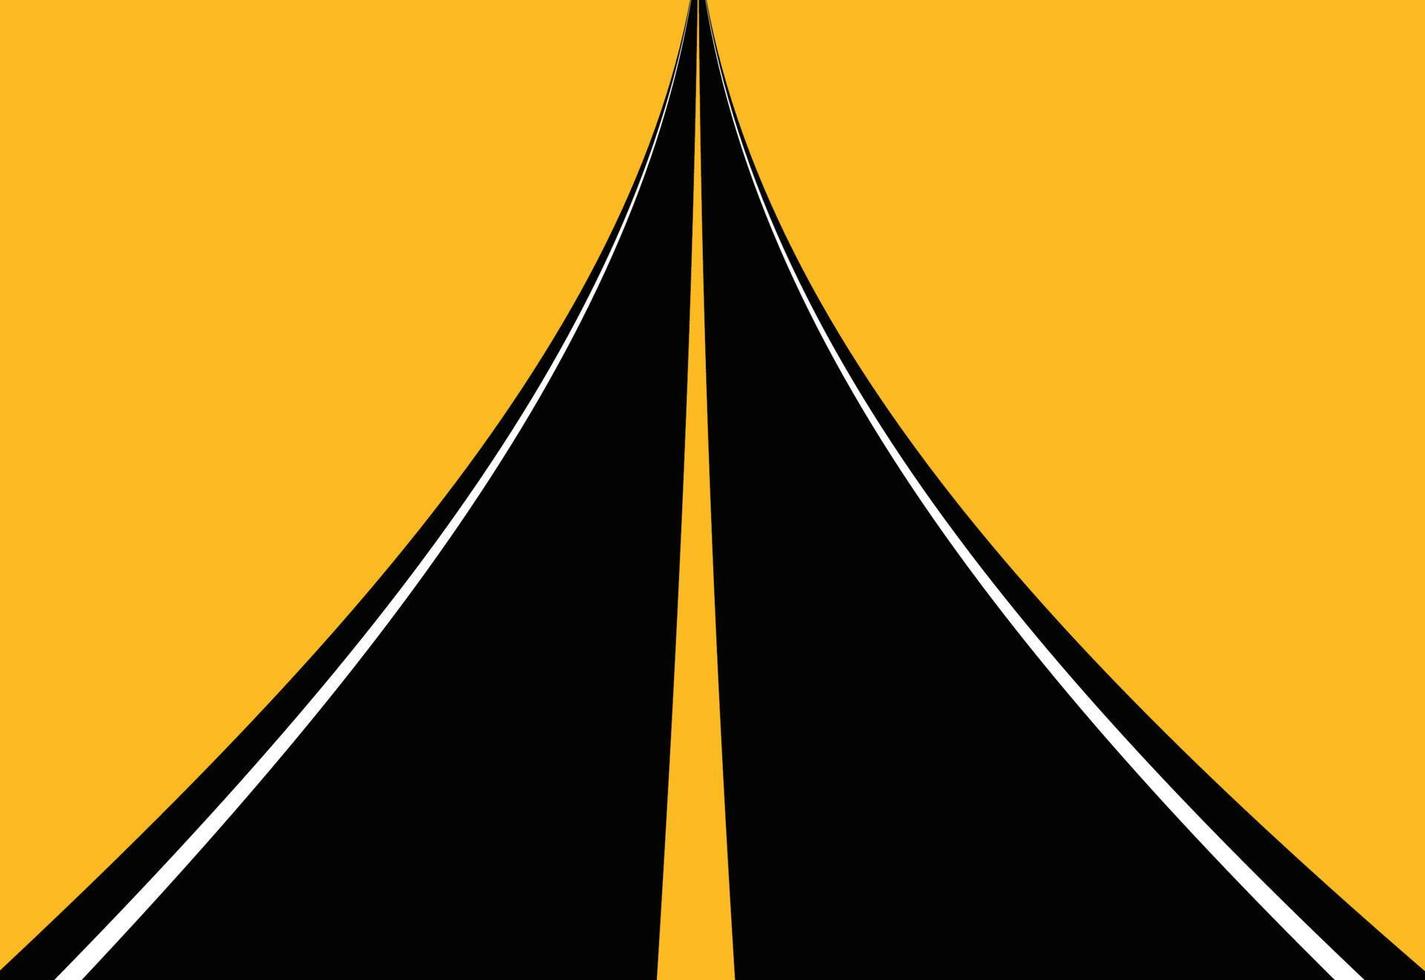 Road concept background design vector